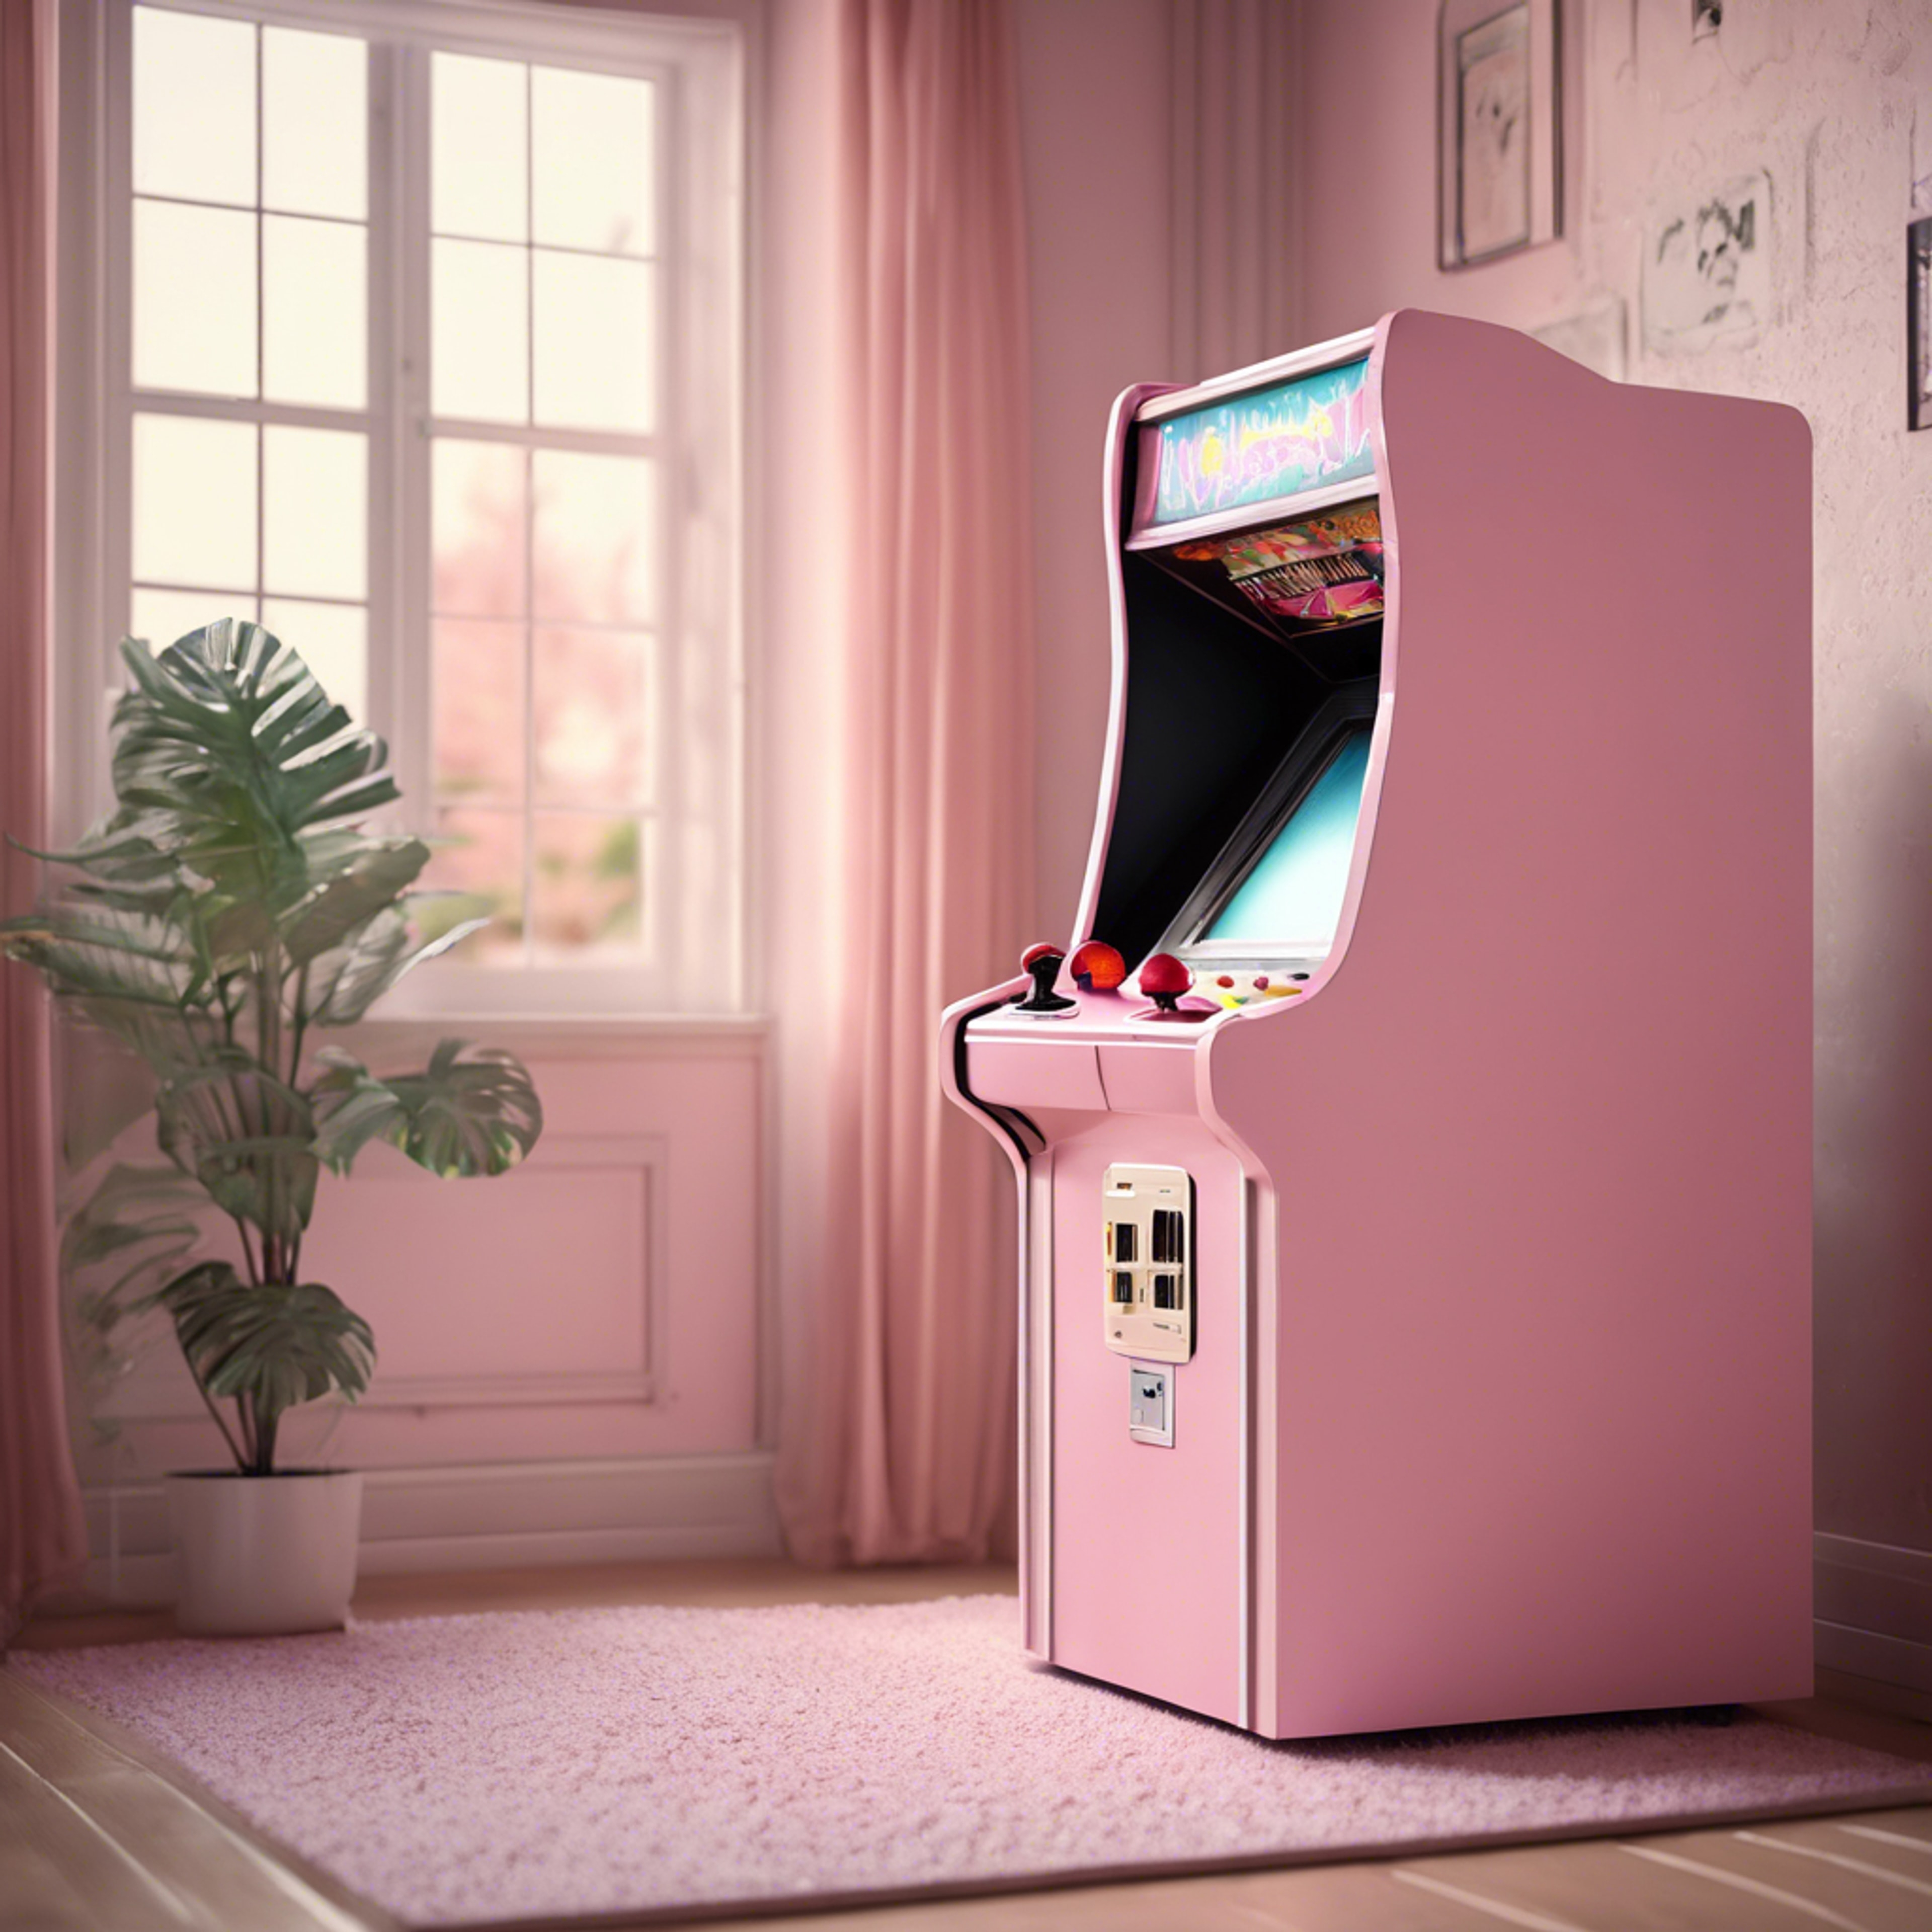 A pastel pink retro arcade machine in a cute, feminine room during sunrise. Tapet[d6fdc55d66e84aad939c]